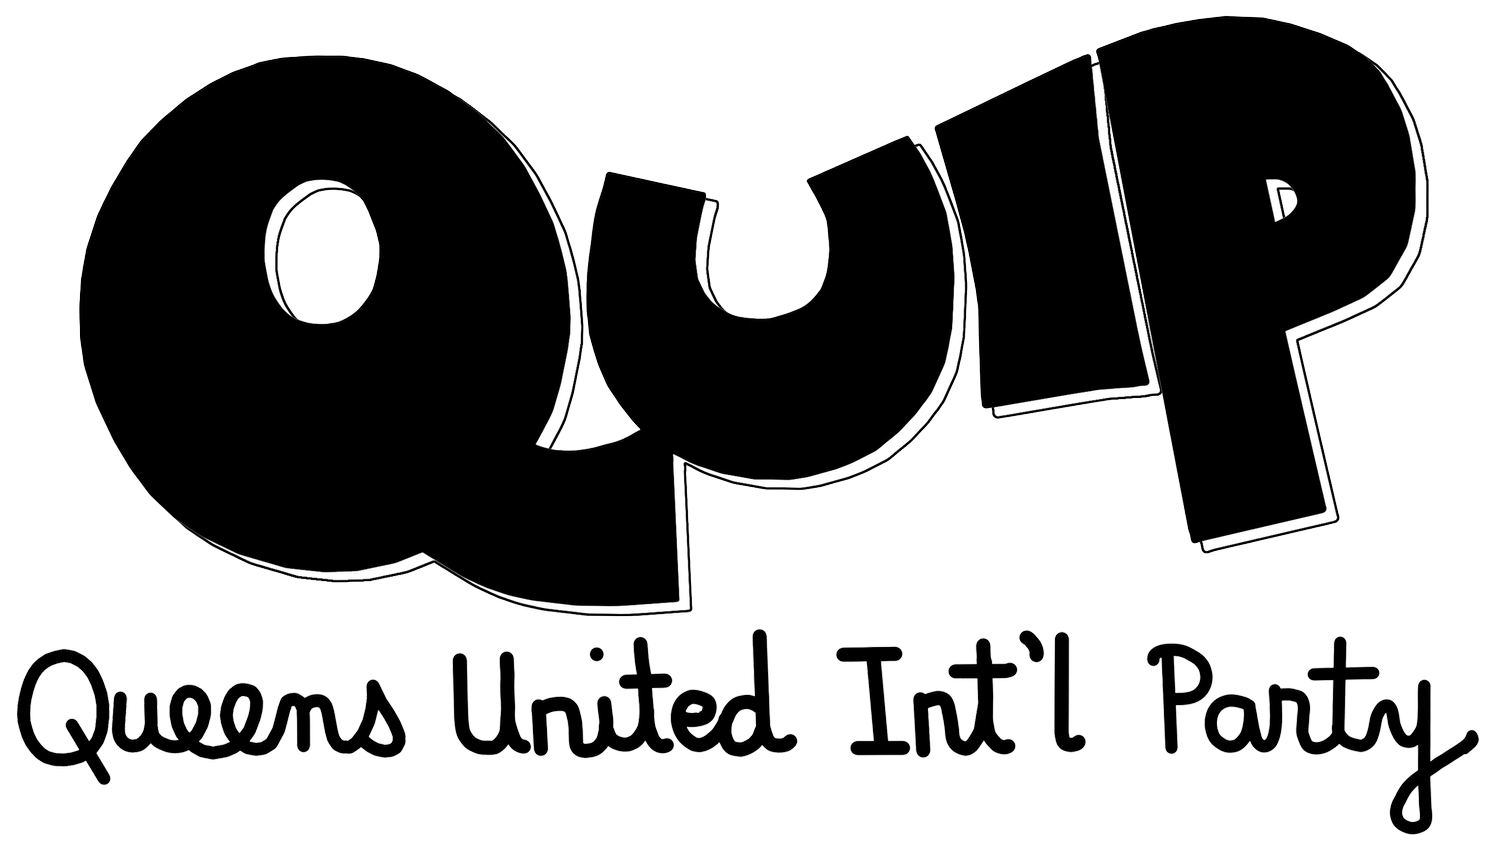 QUIP (Queens United Int'l Party)